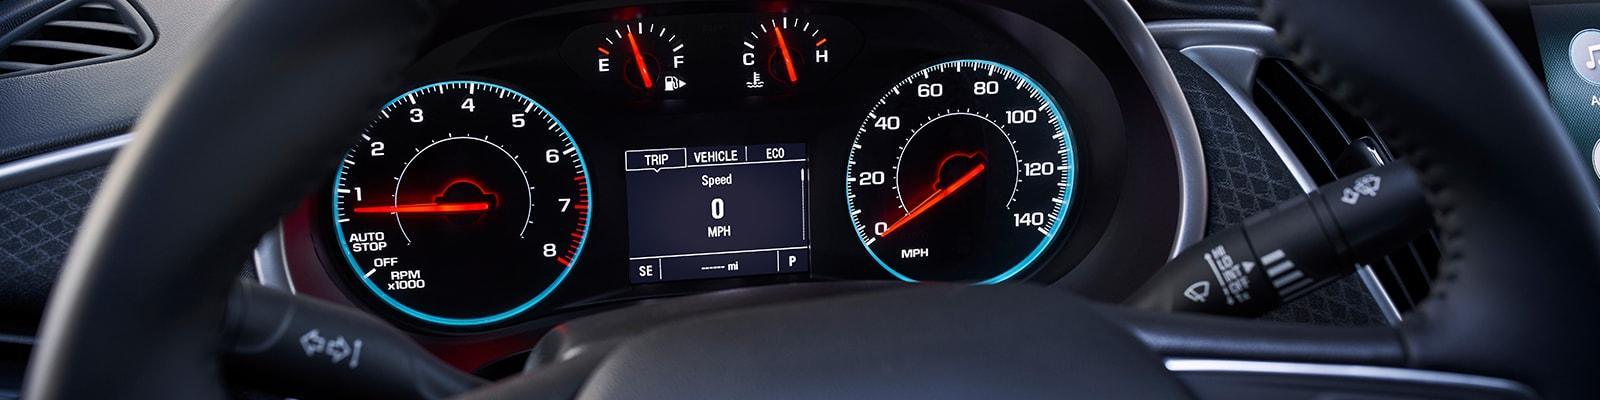 Chevrolet_2019_Malibu_Interior-Dash-Steering-Wheel_banner